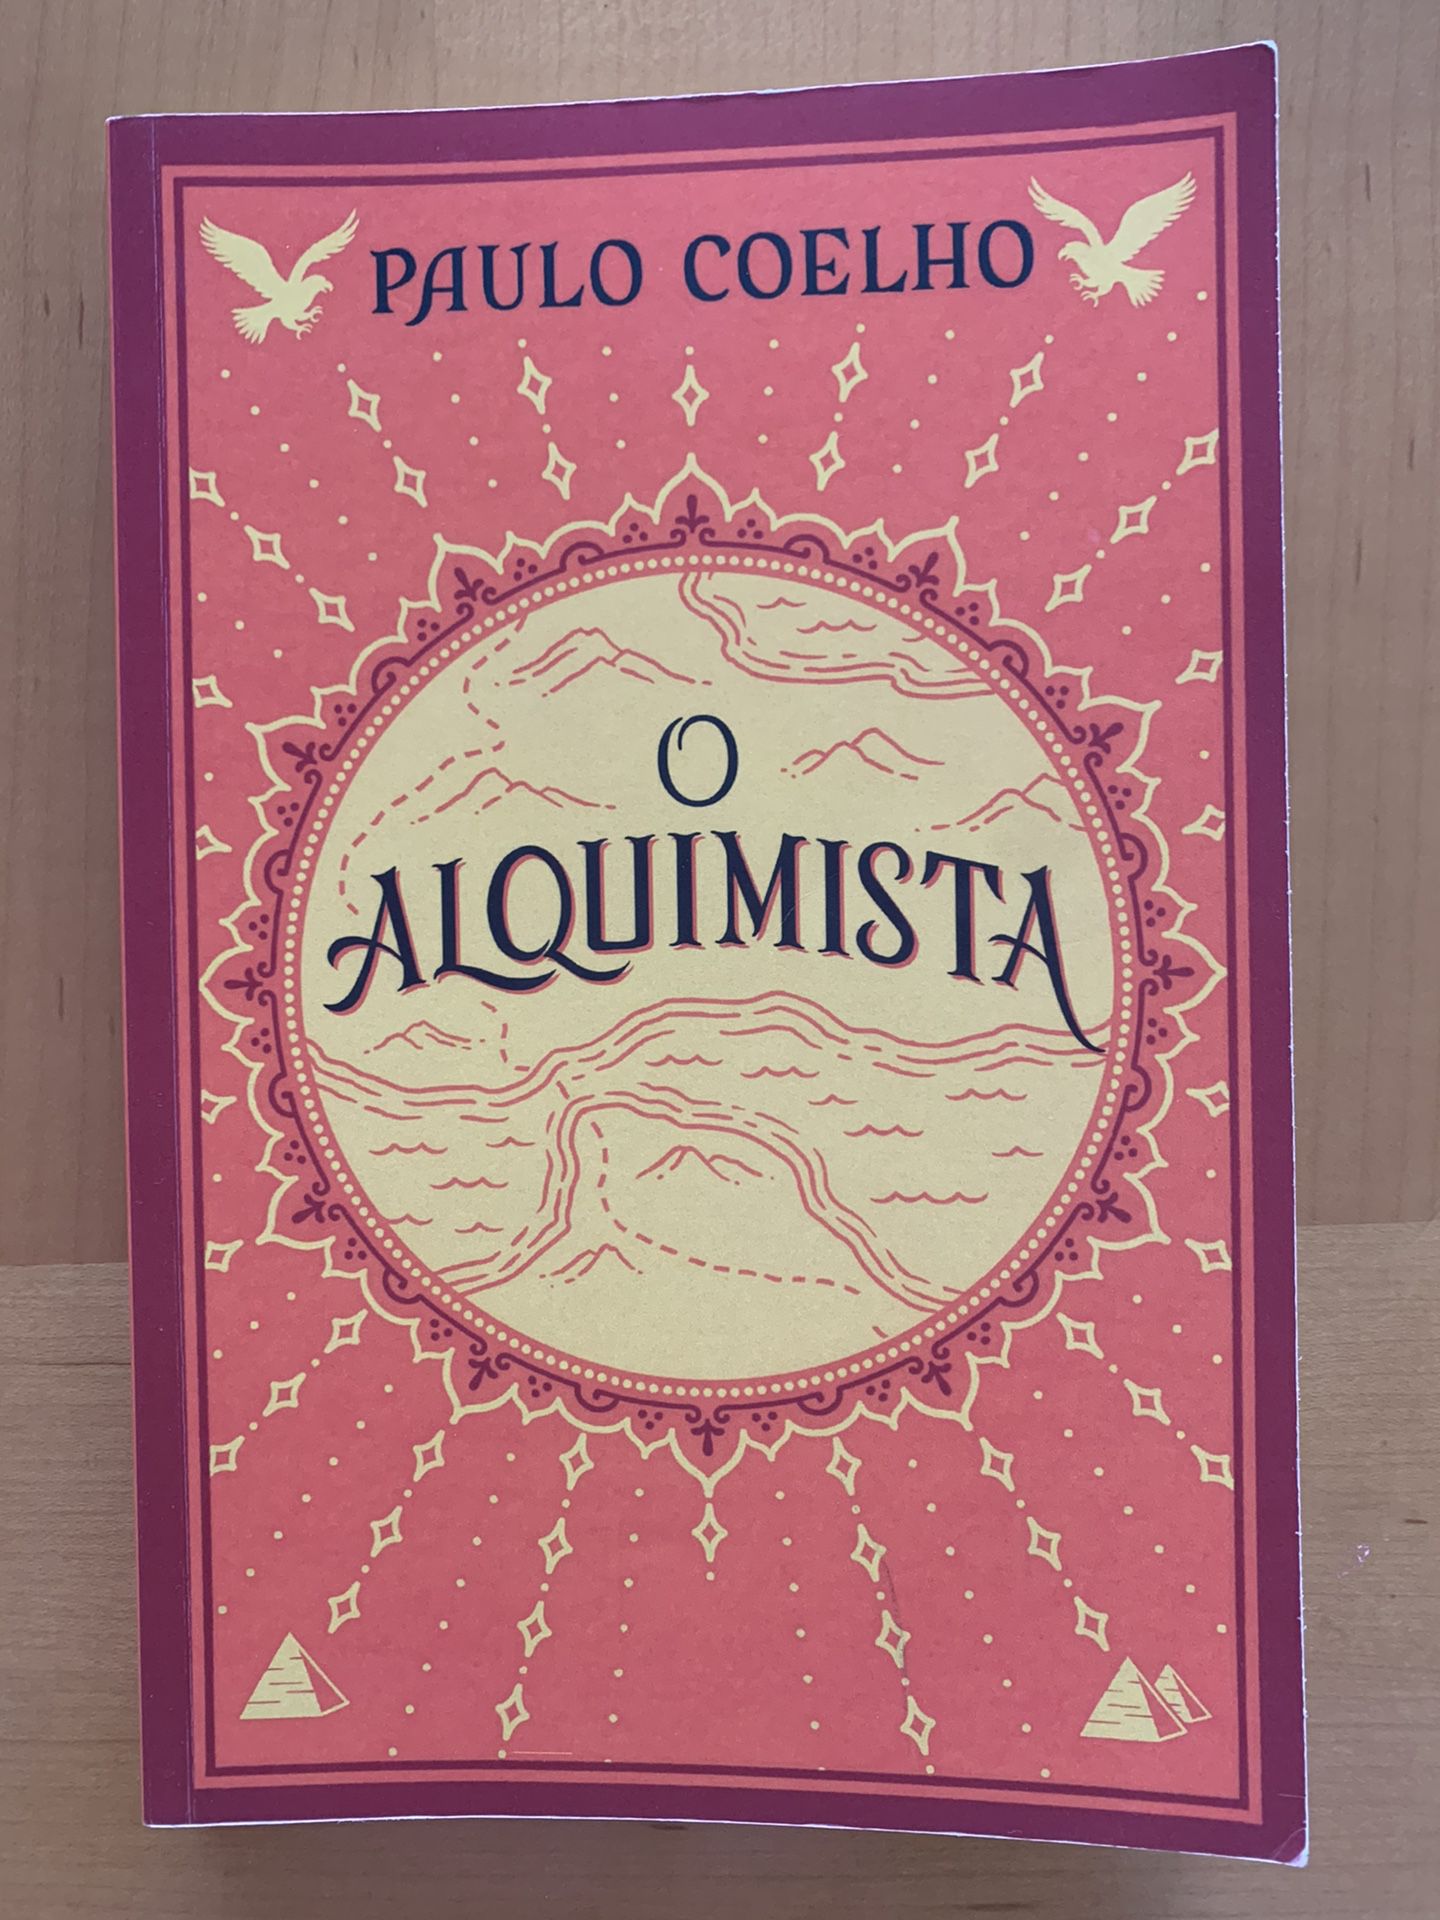 O Alquimista - The Alchemist